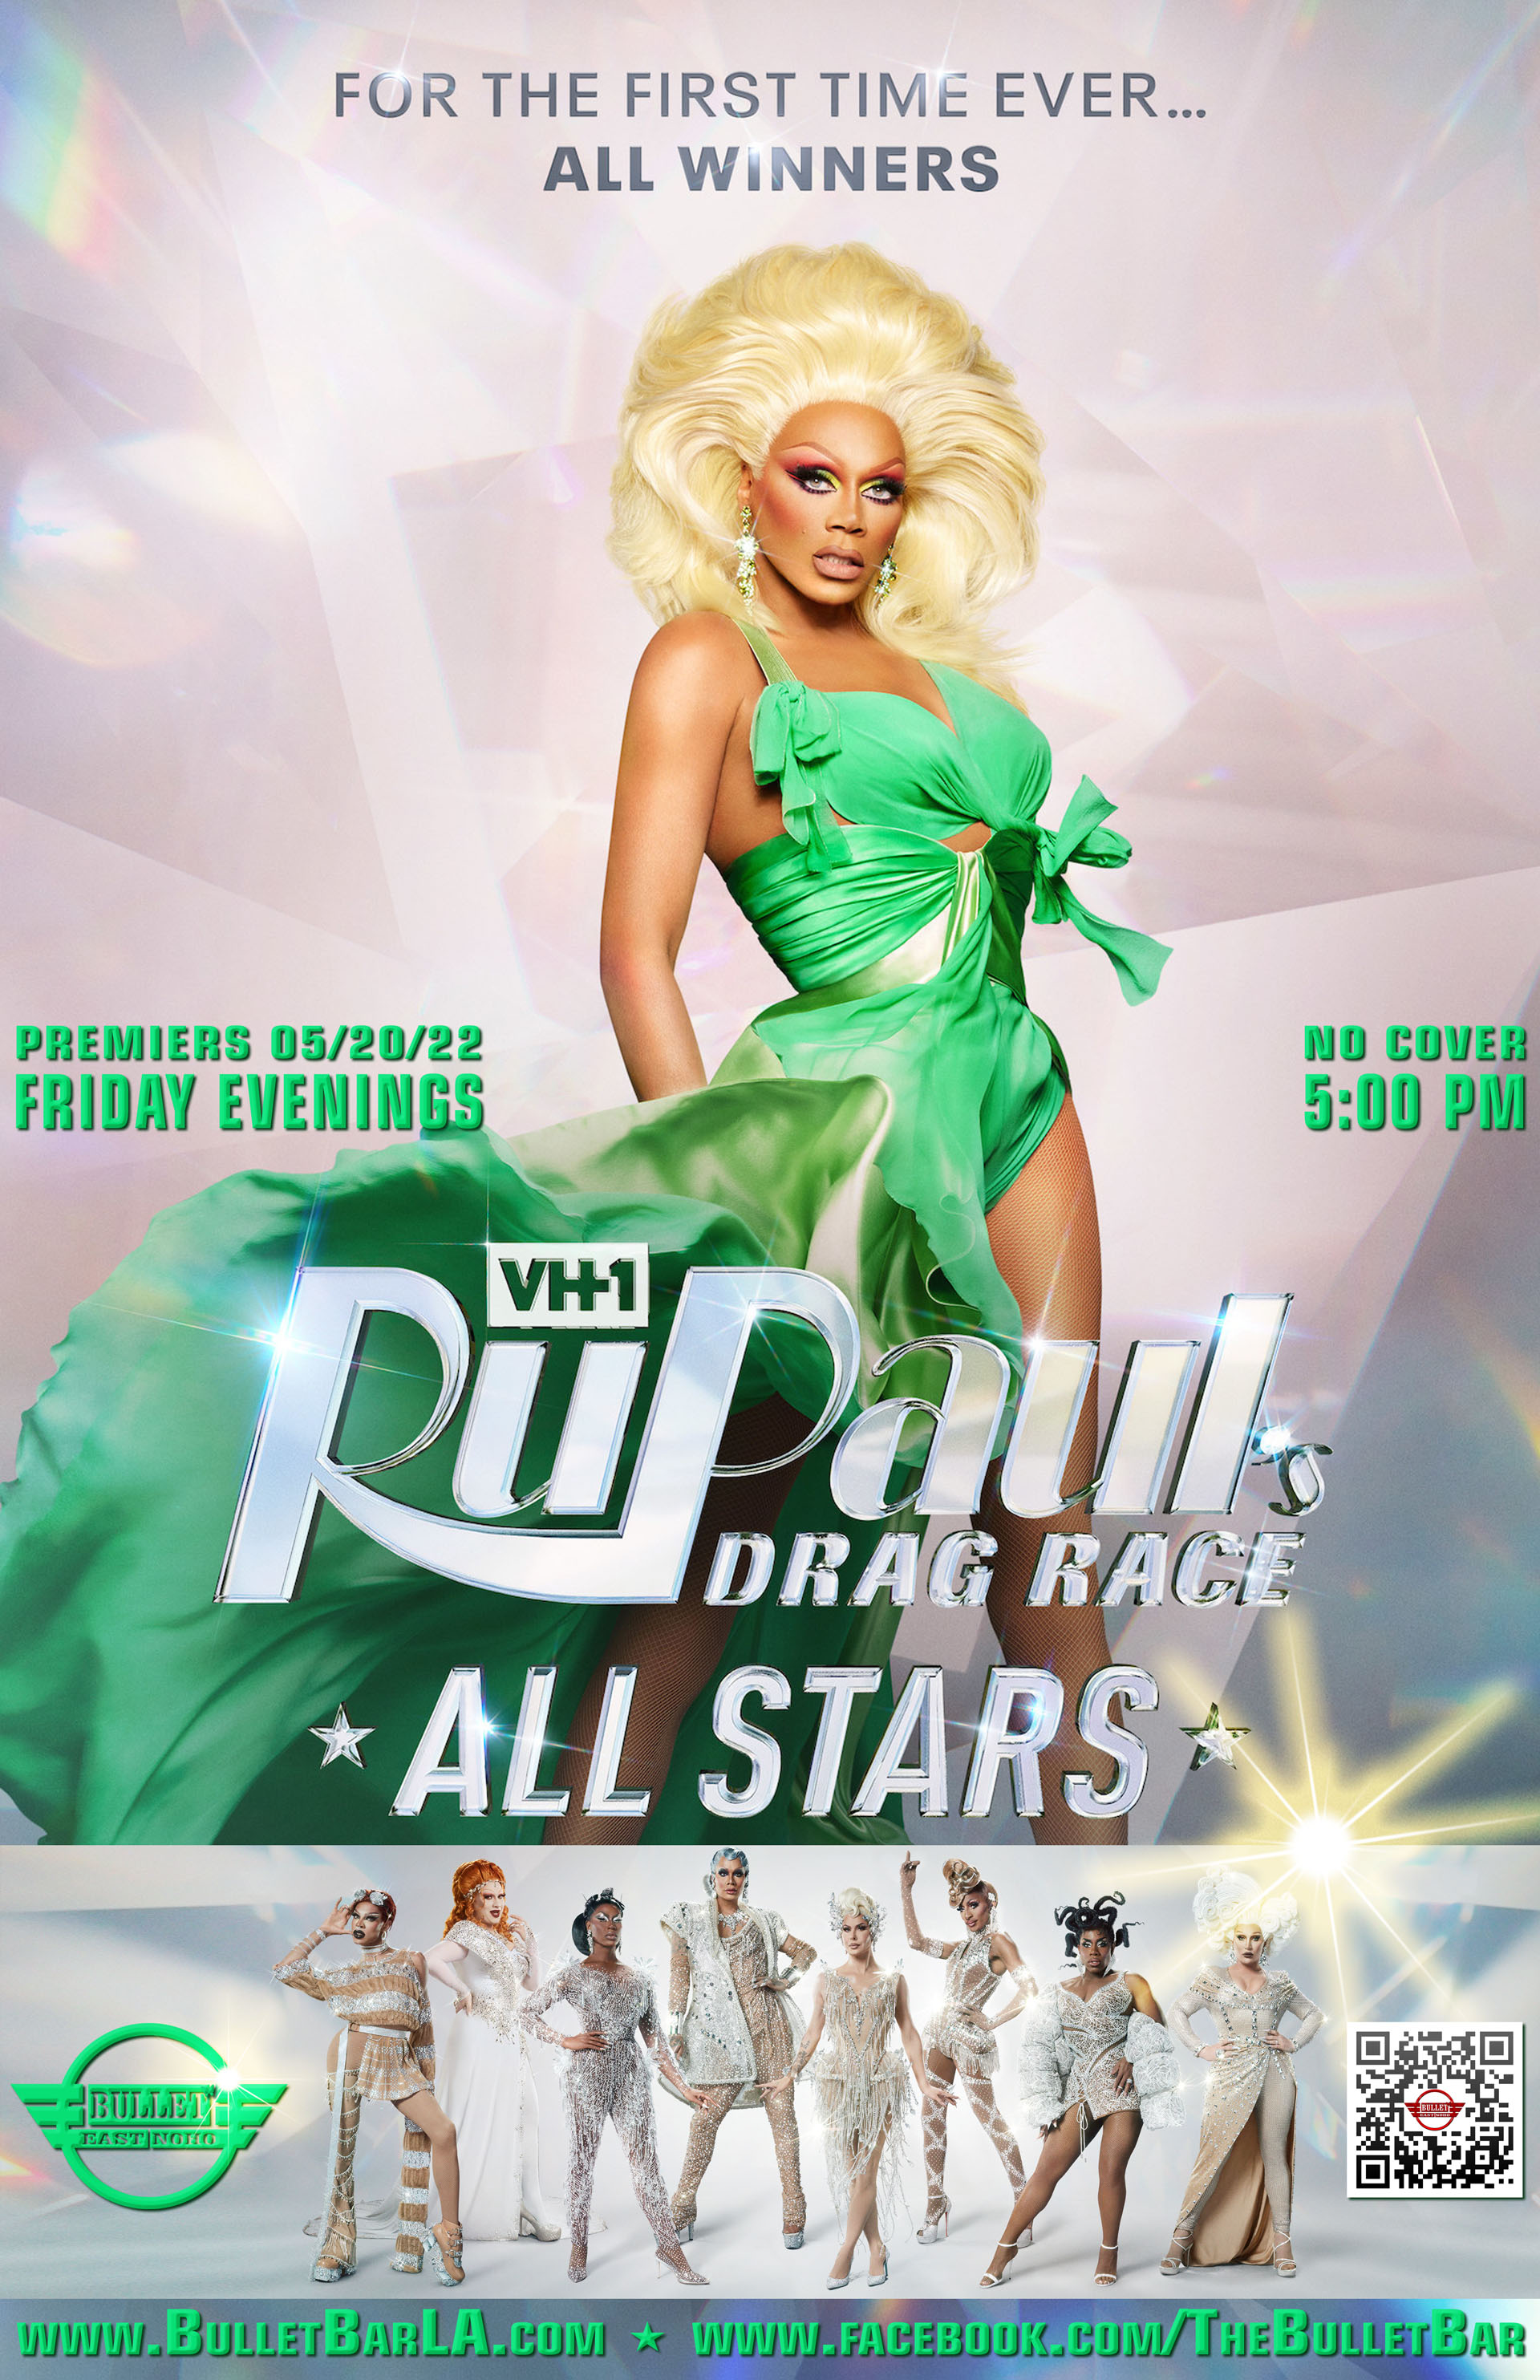 The Bullet Bar Presents RuPaul's Drag Race All Stars Season 7: Friday Evenings at 6:00 PM! No cover.